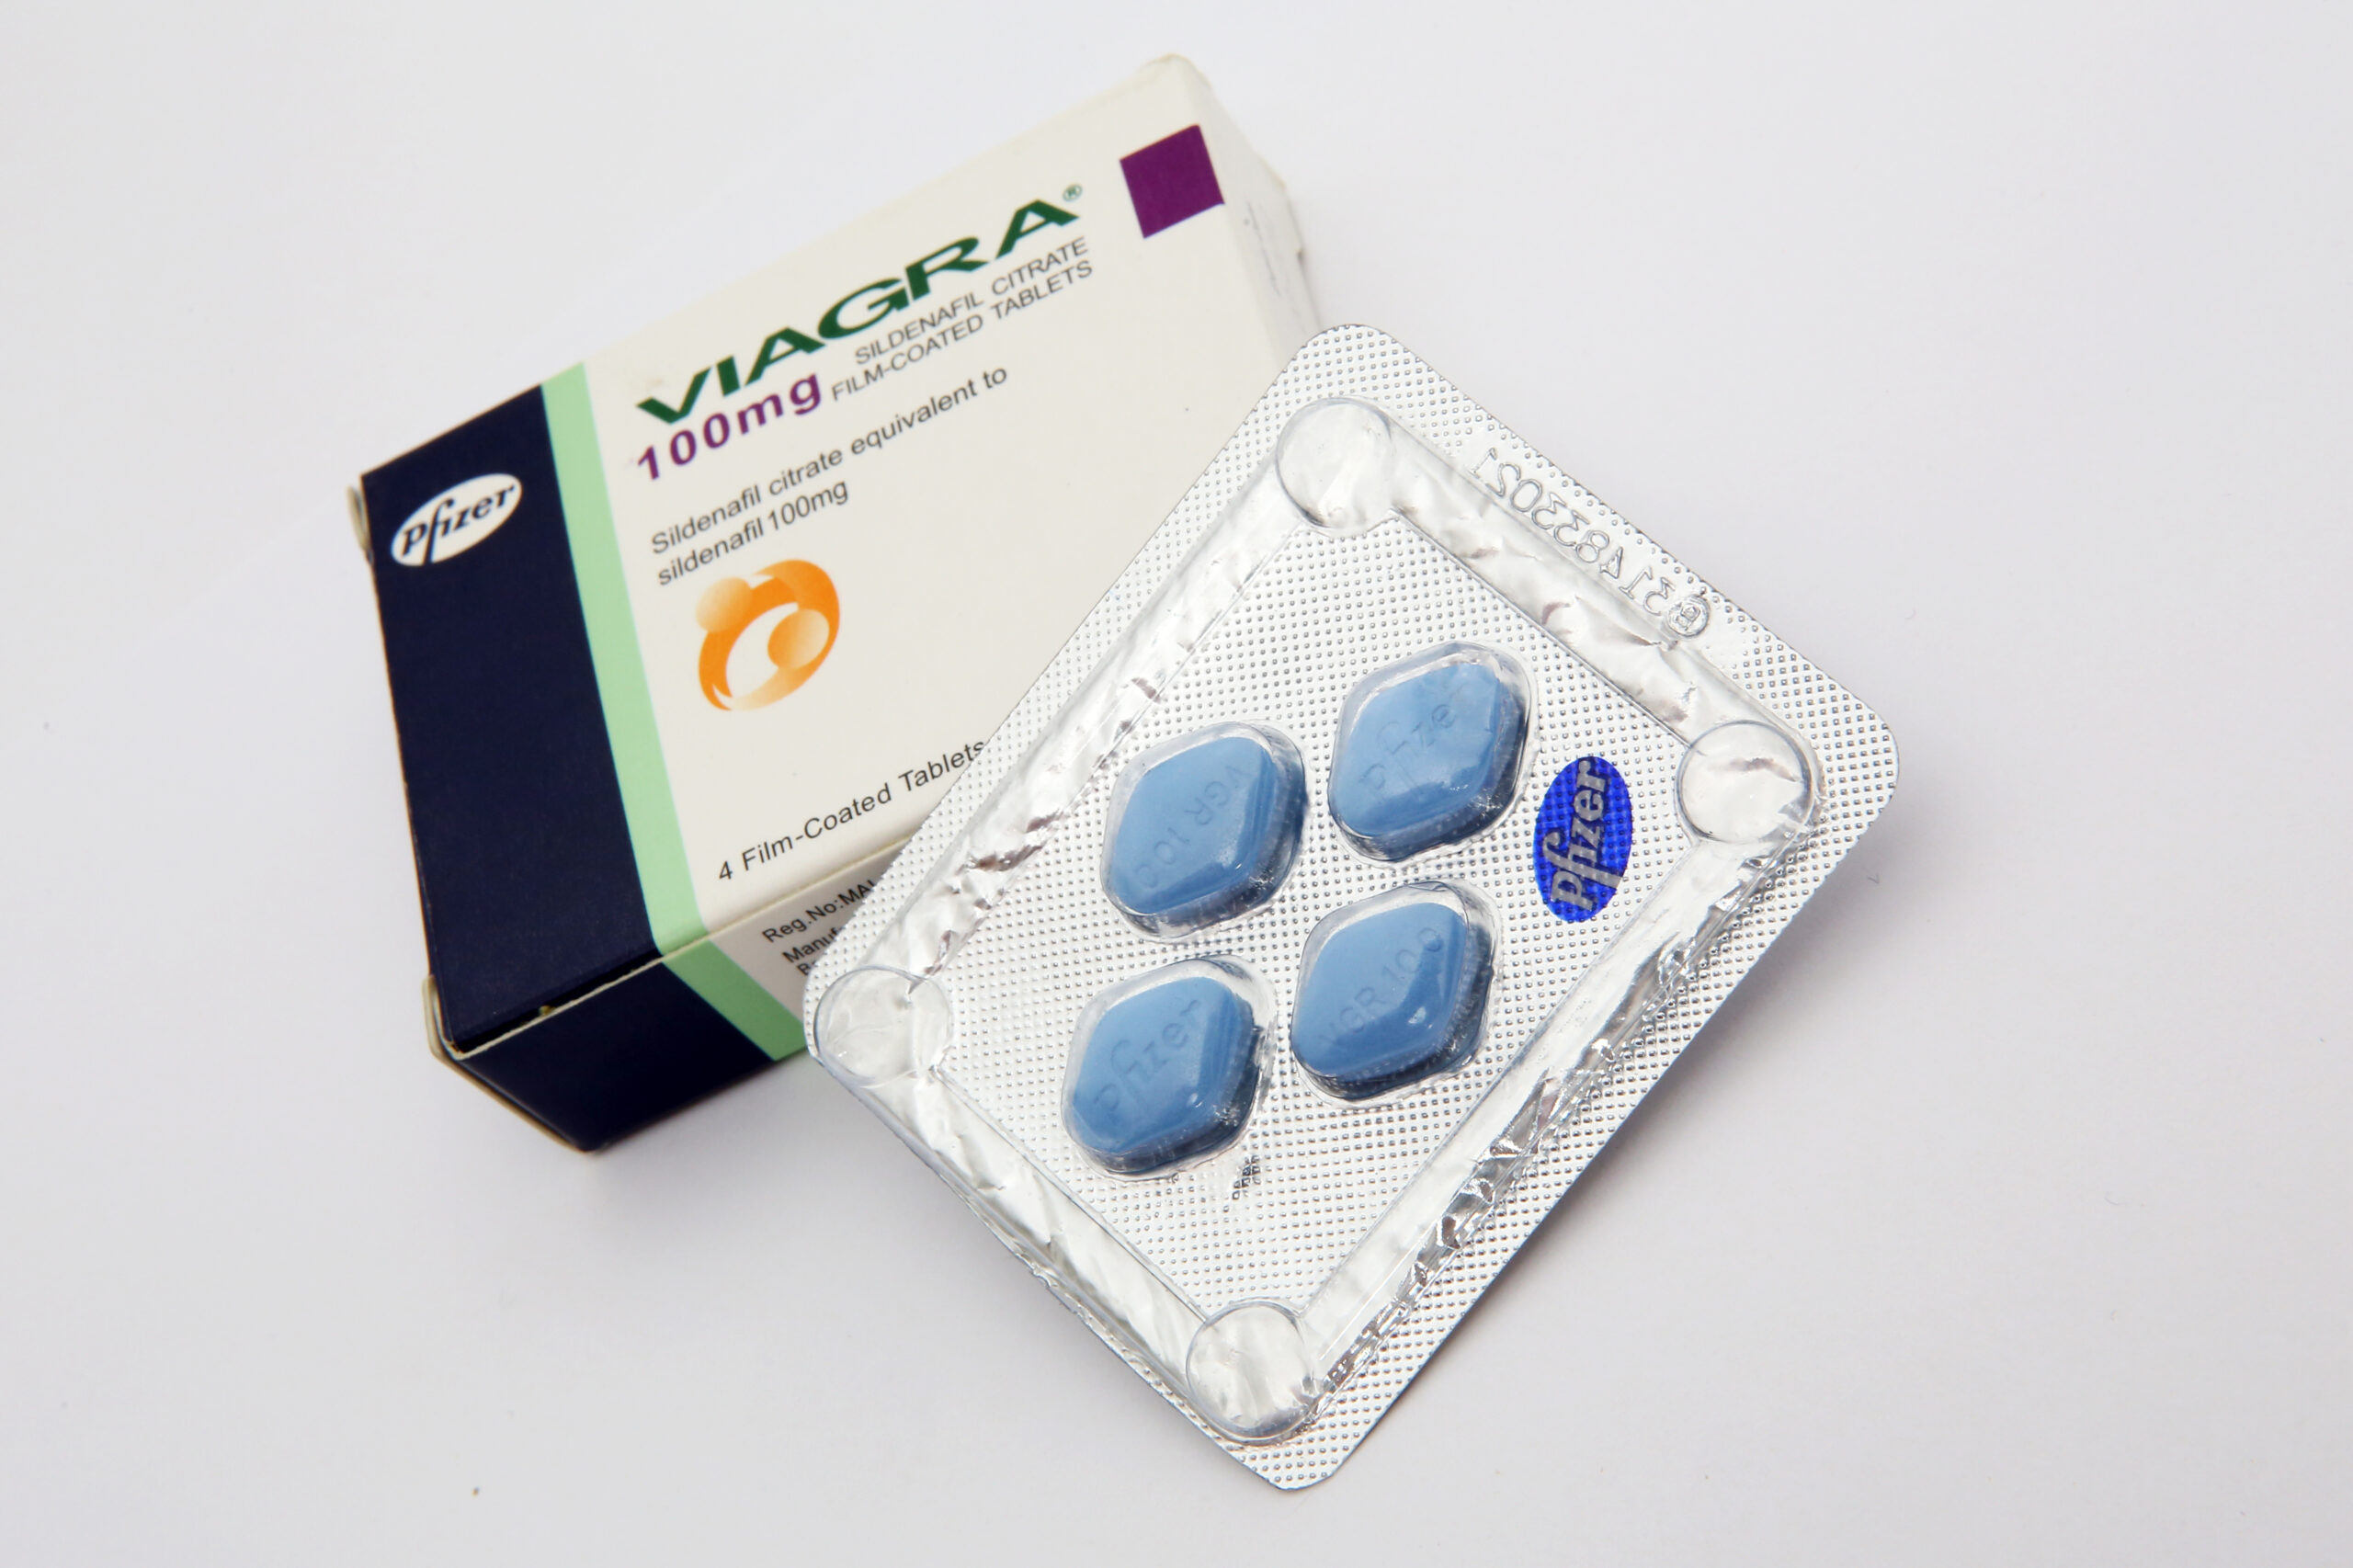 Viagra might help make stem cell transplants easier